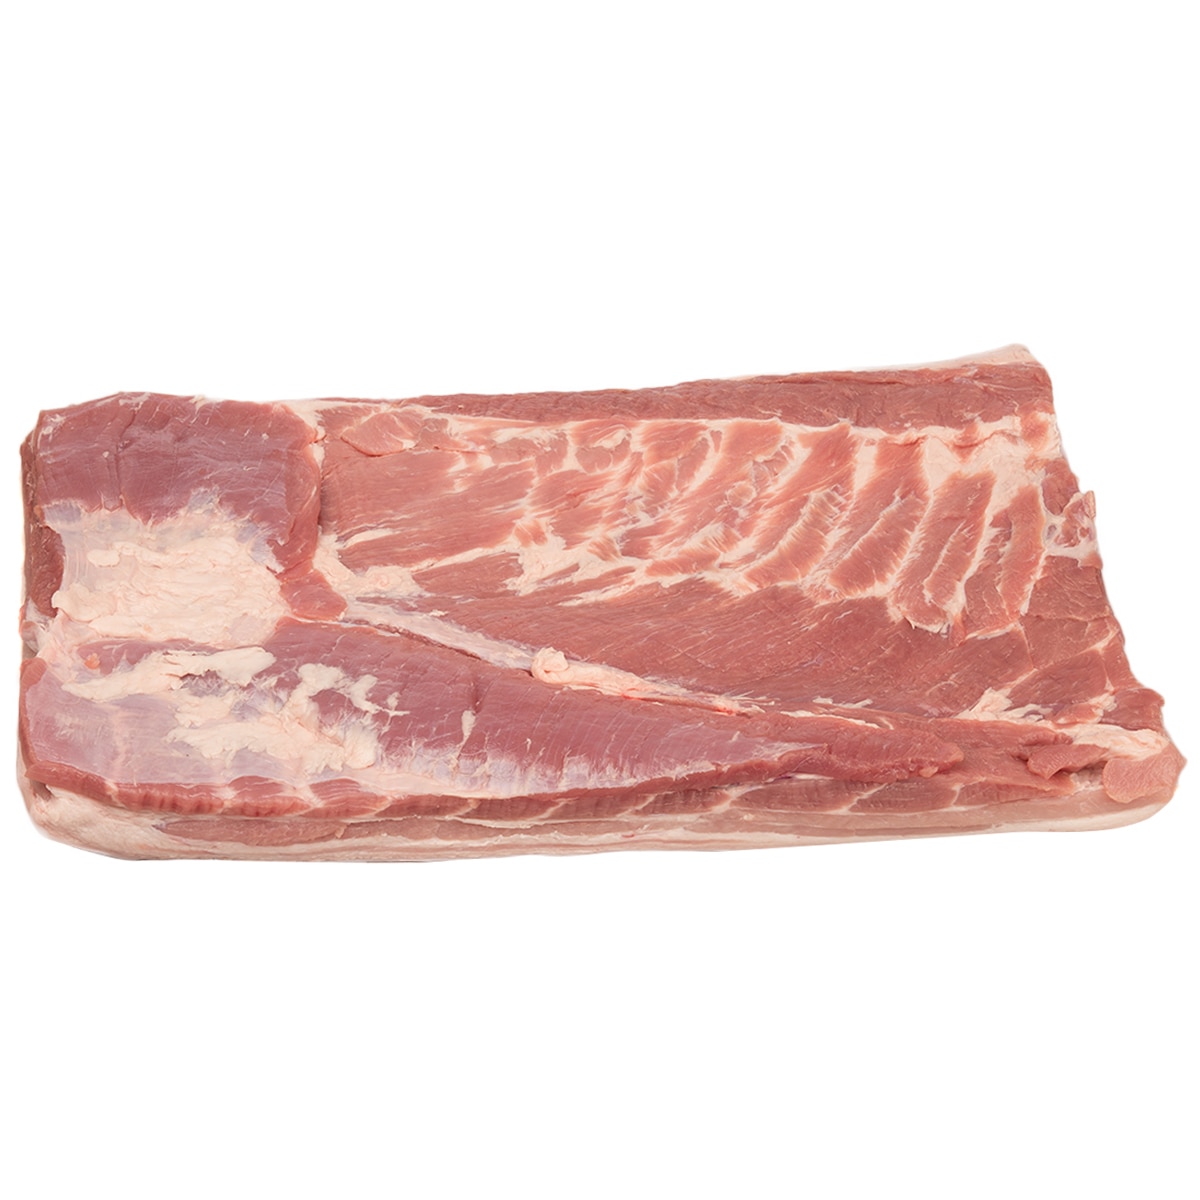 Australian Pork Belly Whole Boneless + Rind On